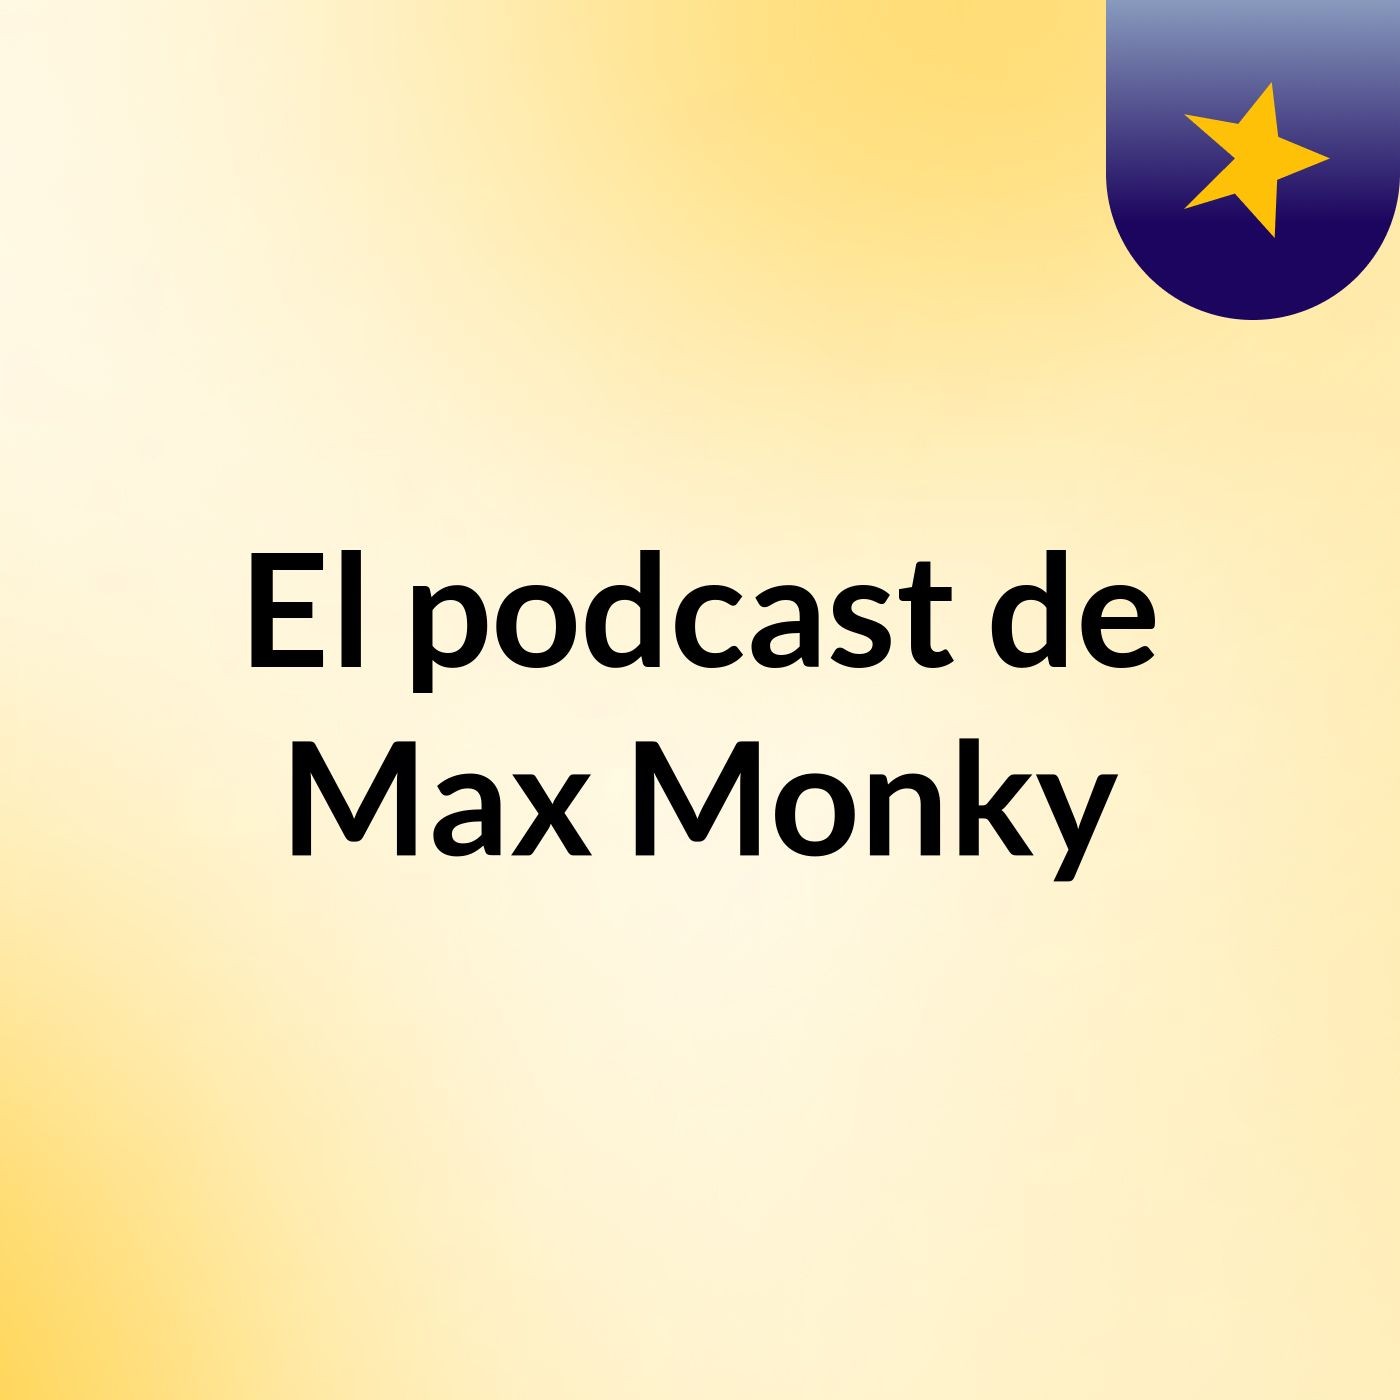 Episodio 5 - El podcast de Max Monky